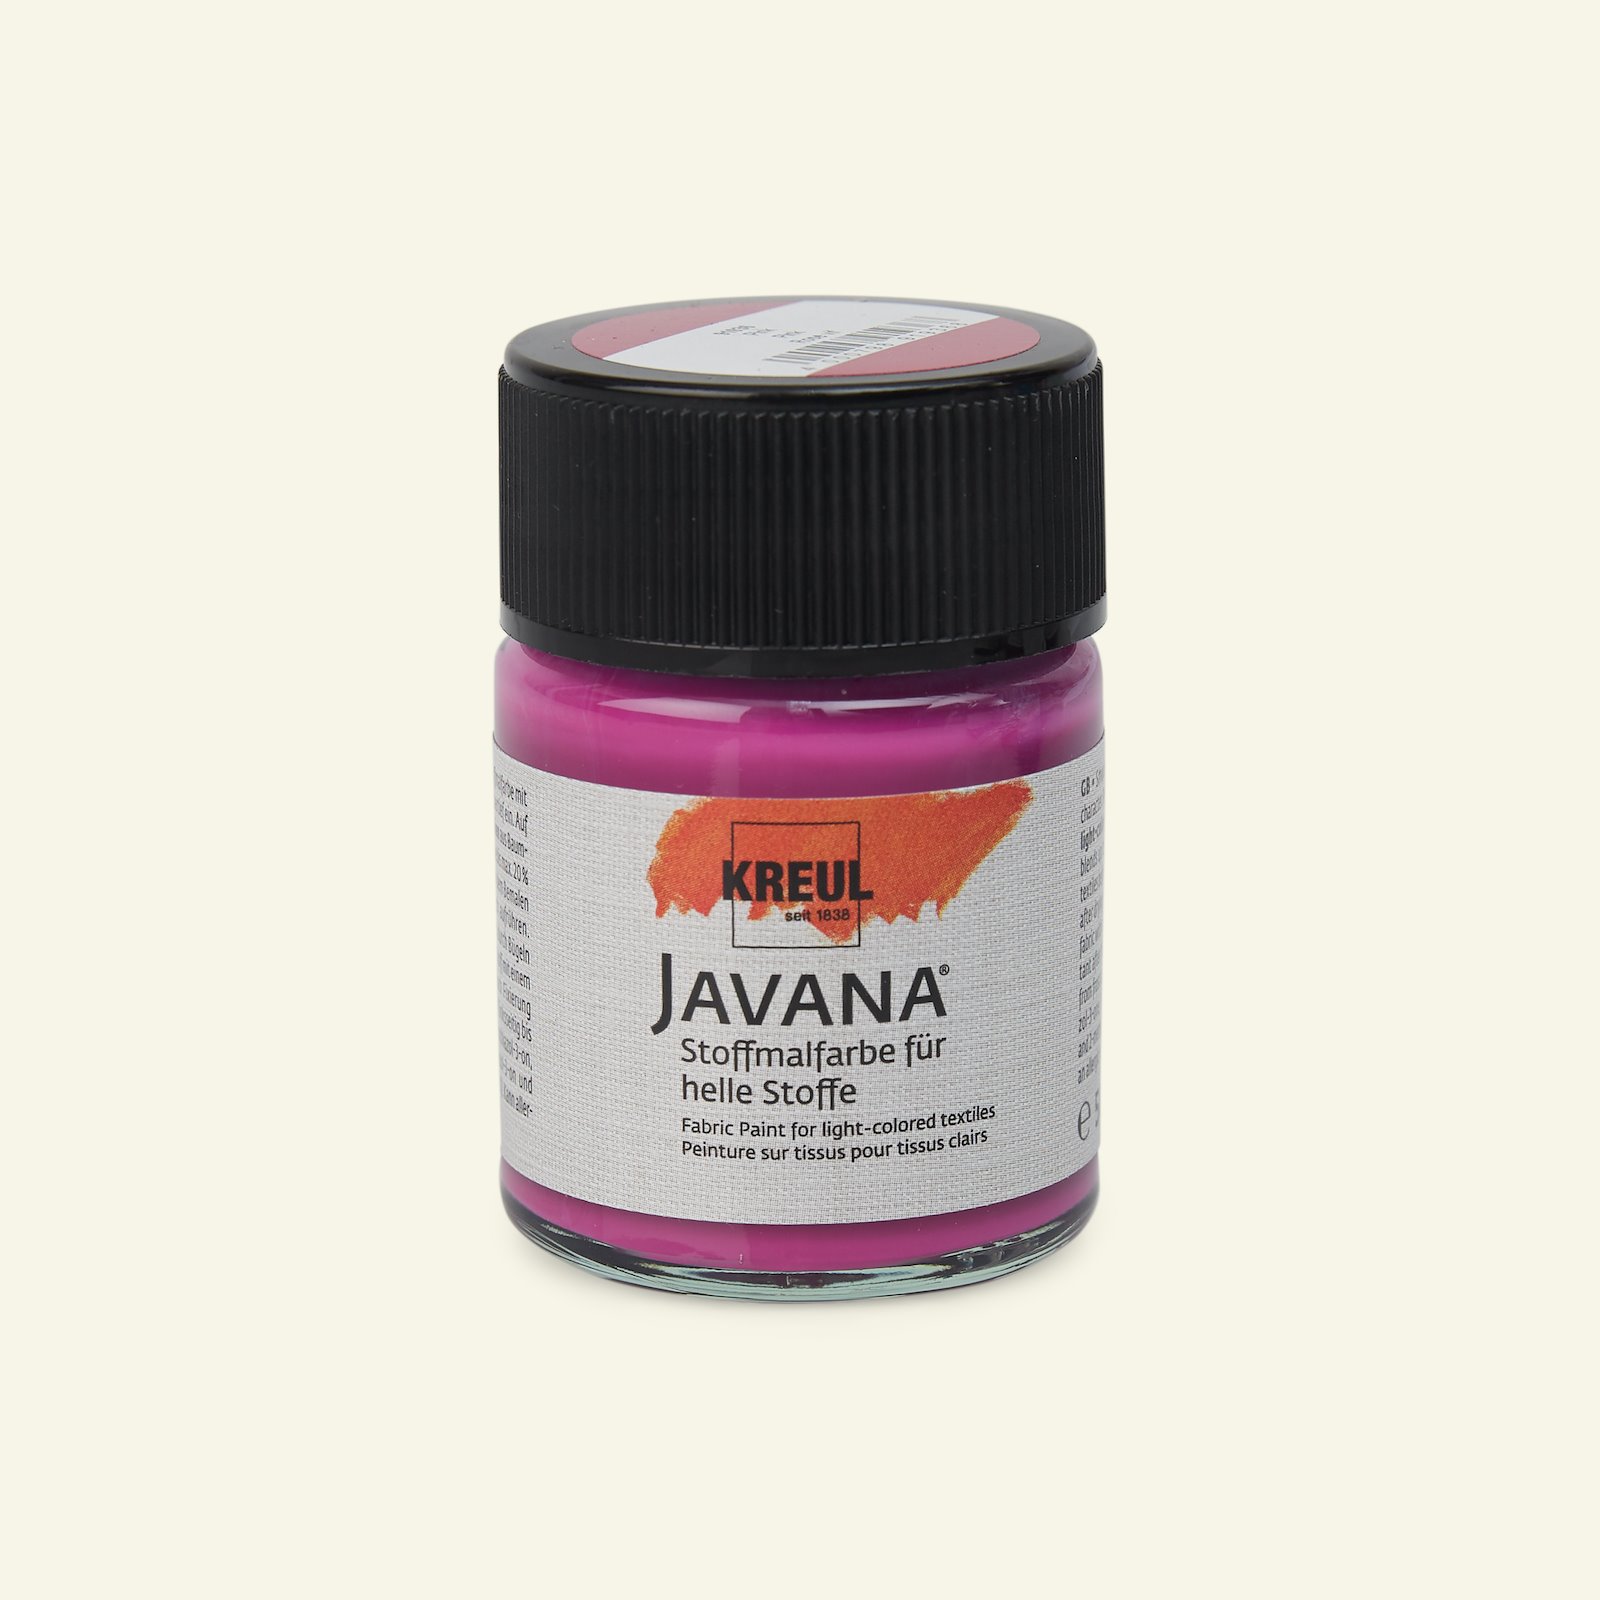 Javana Textilfarbe, Pink, 50ml 29608_pack_b